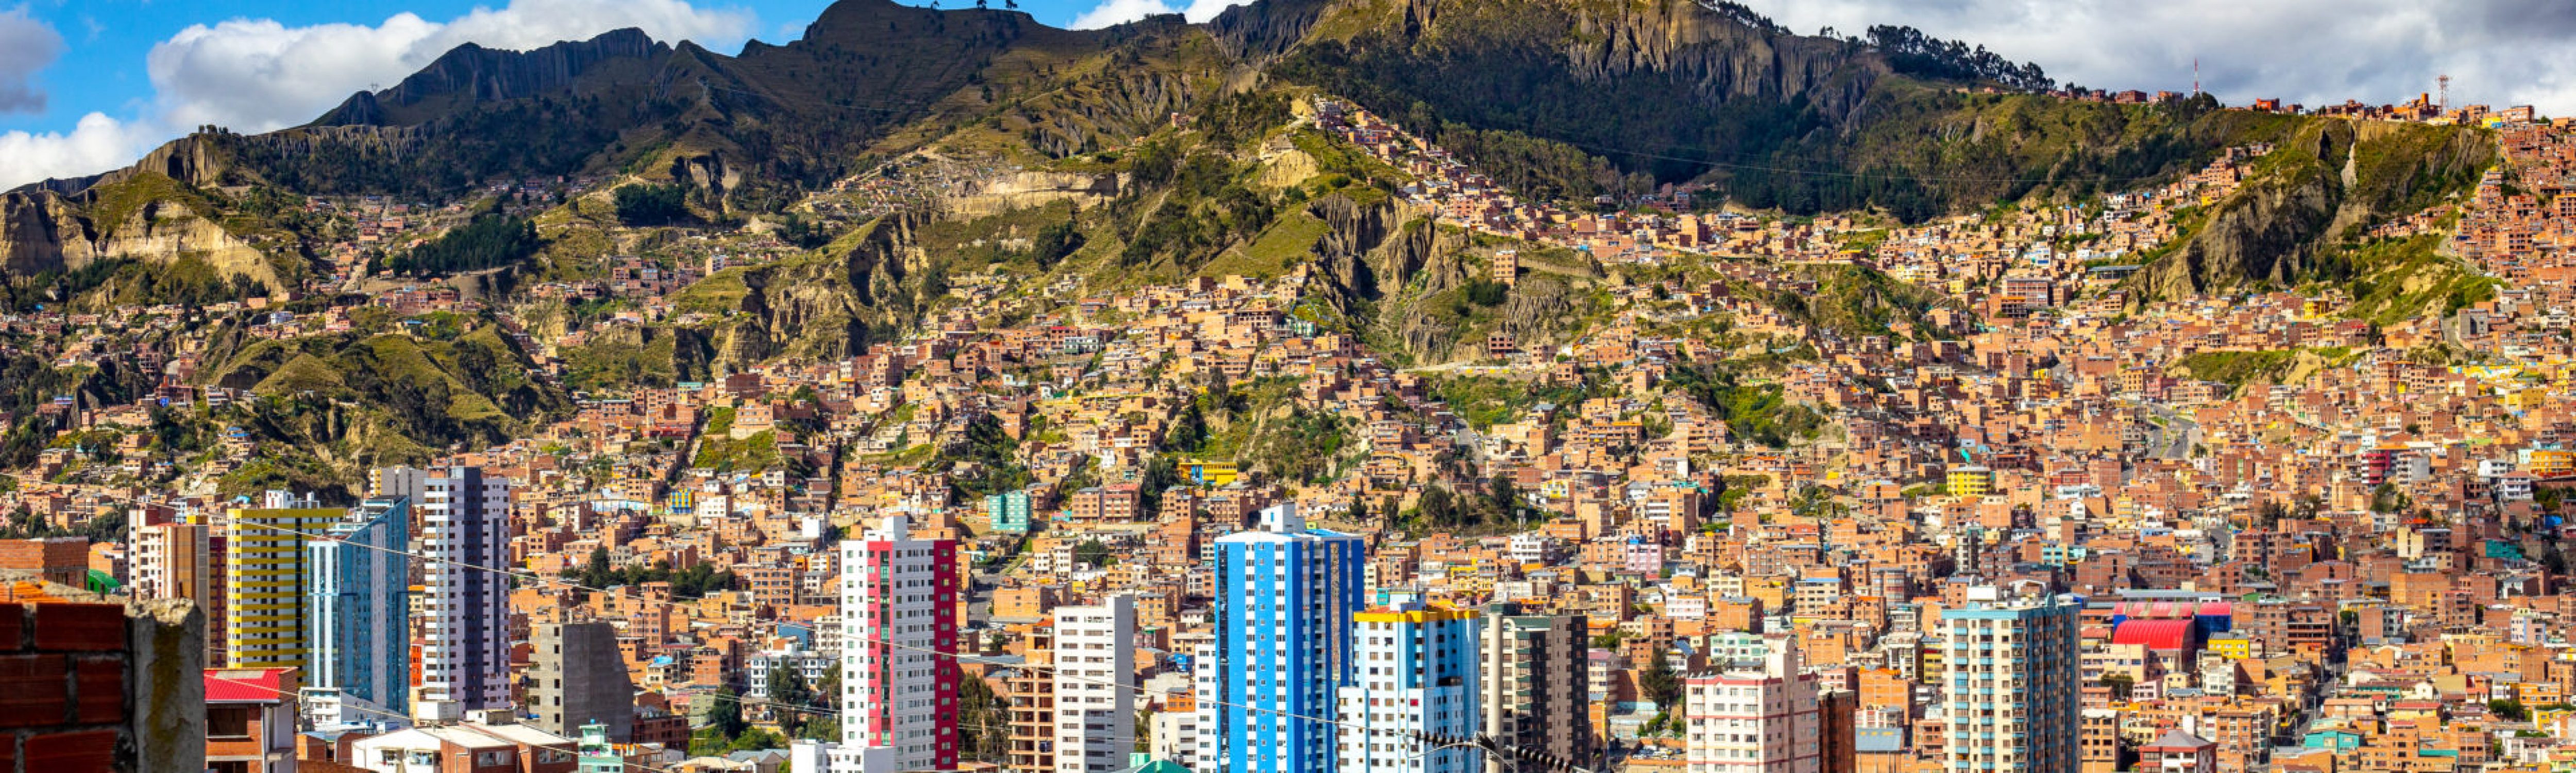 La Paz City, Bolivia